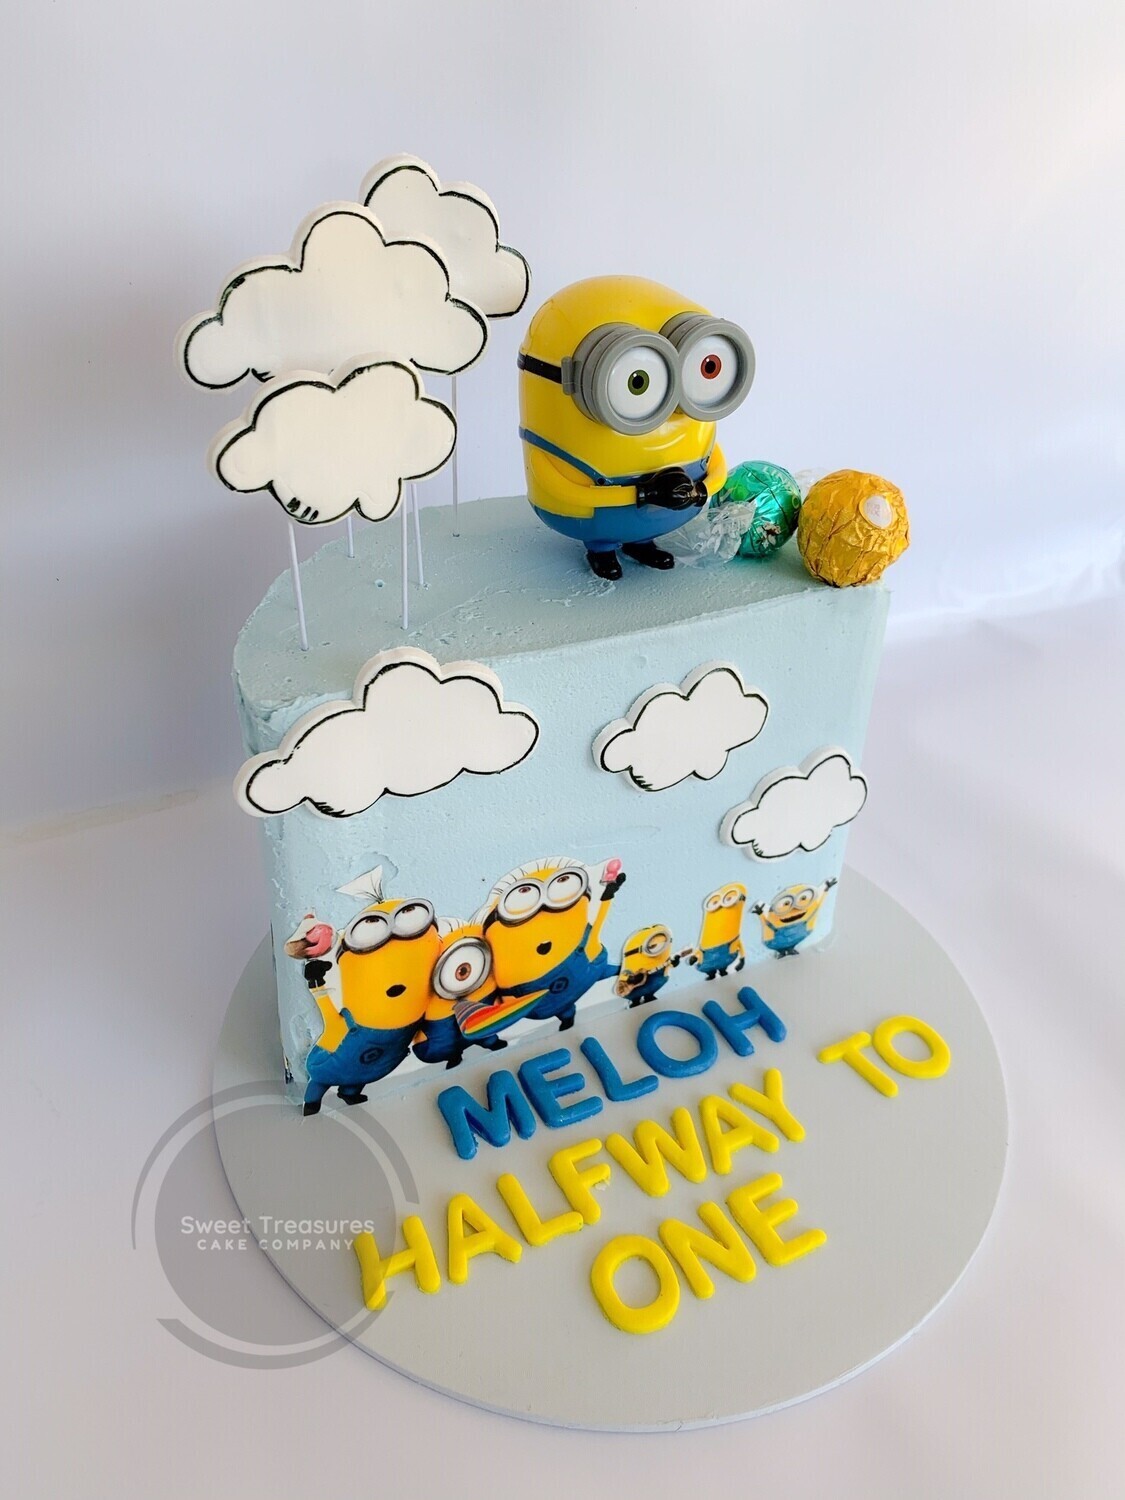 6 months Minions themed Half birthday cake